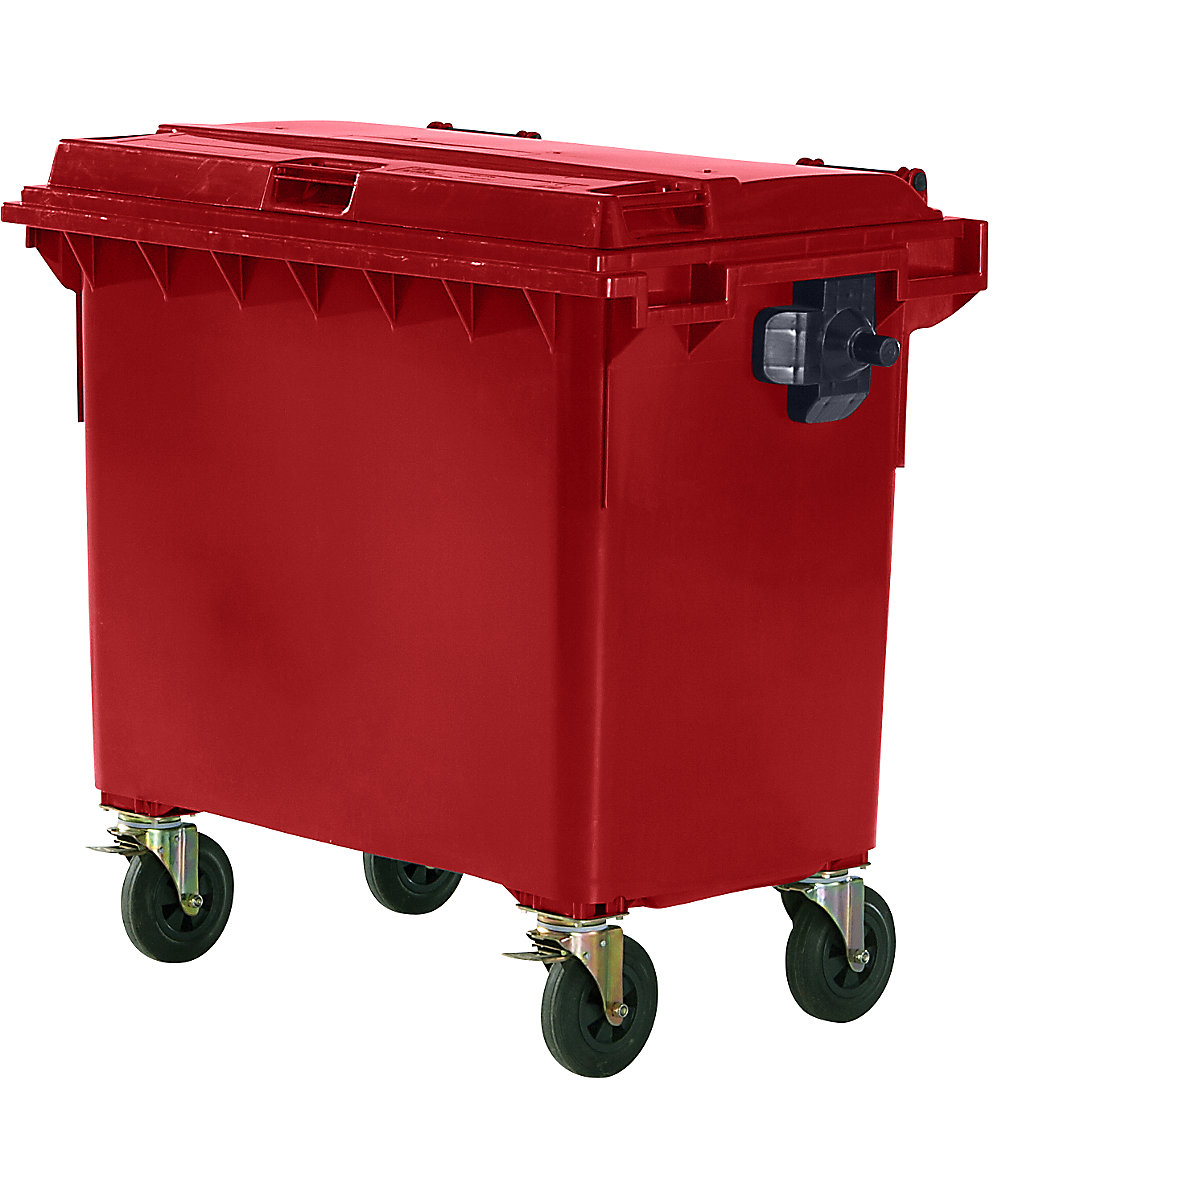 Container per rifiuti in plastica, DIN EN 840, capacità 660 l, largh. x alt. x prof. 1360 x 1235 x 765 mm, rosso-5